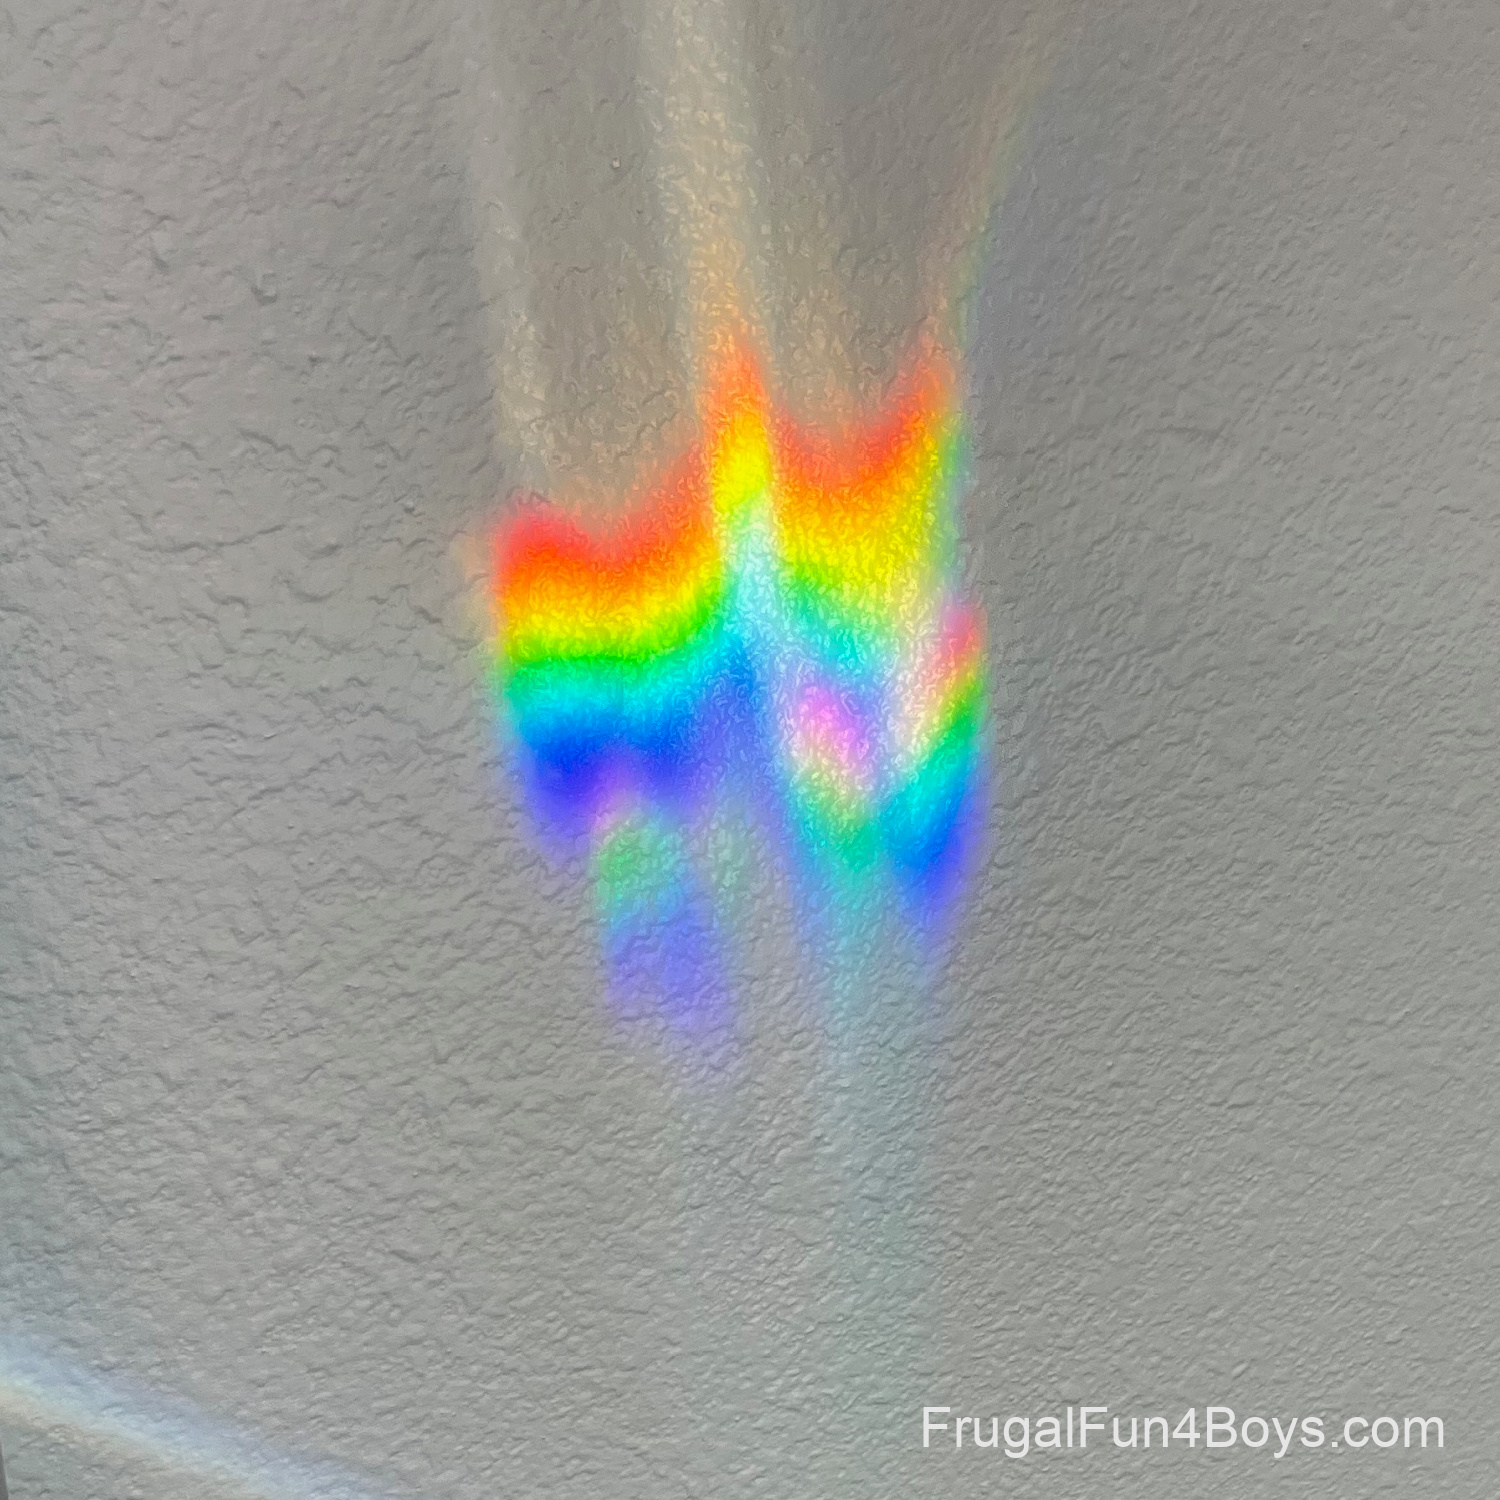 Dancing Rainbow Science experiment